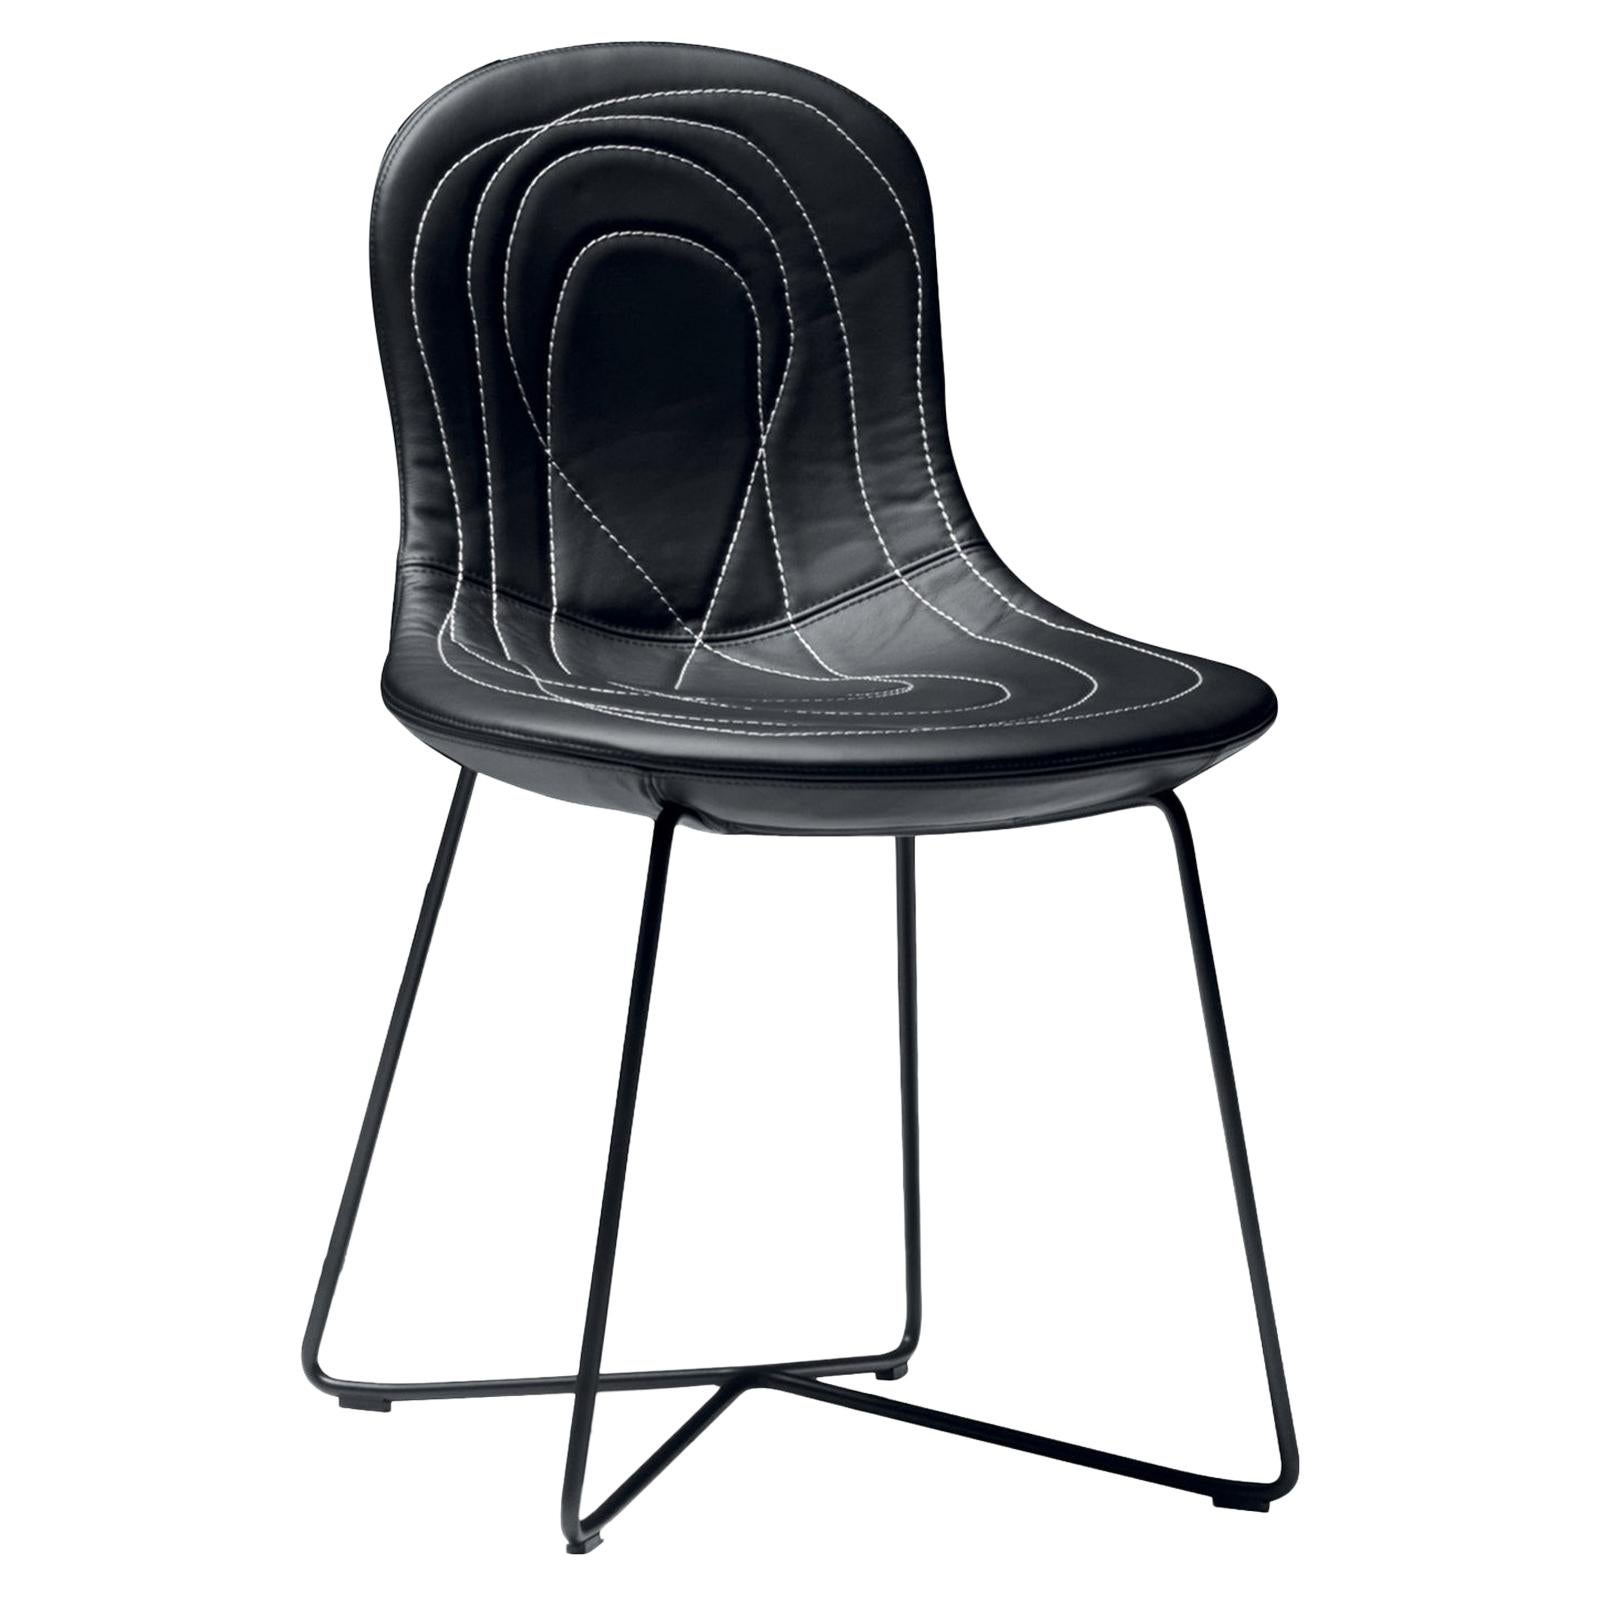 Customizable New Tacchini Doodle Chair Designed by Claesson Koivisto Rune